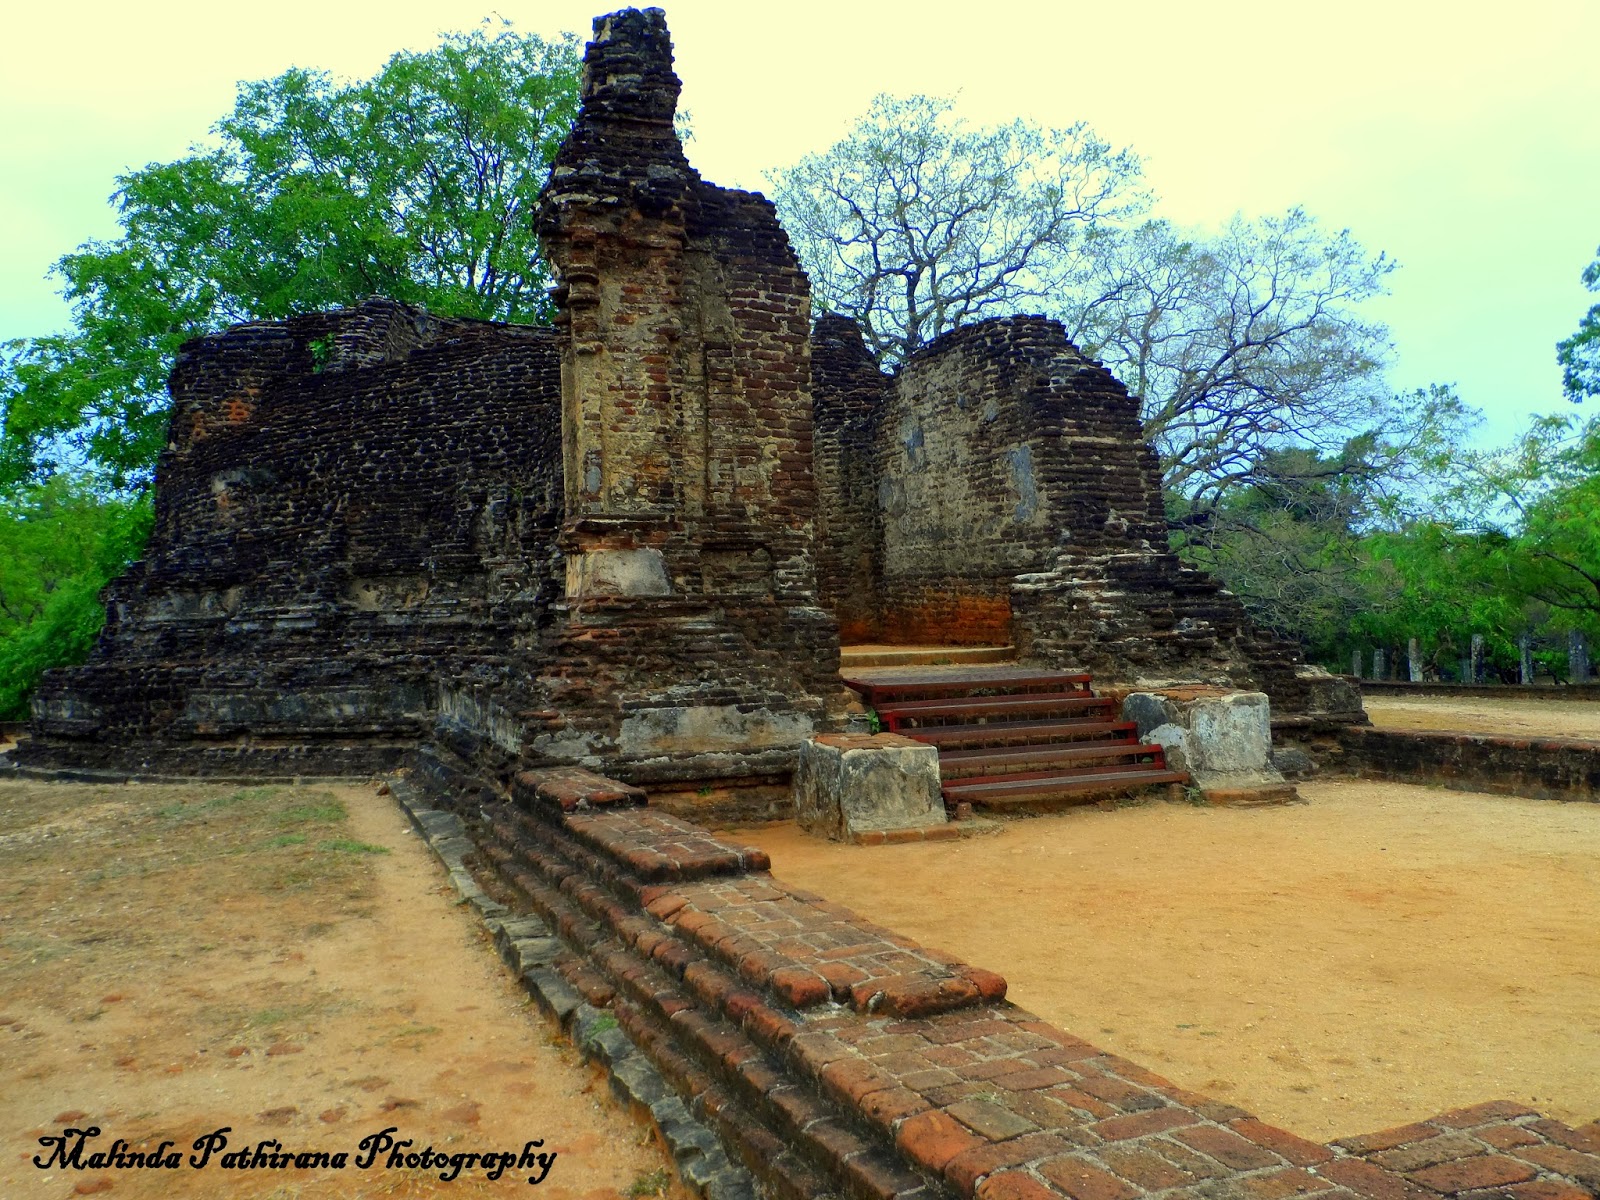 Malinda Pathirana Photography: Pothgul Viharaya at Polonnaruwa